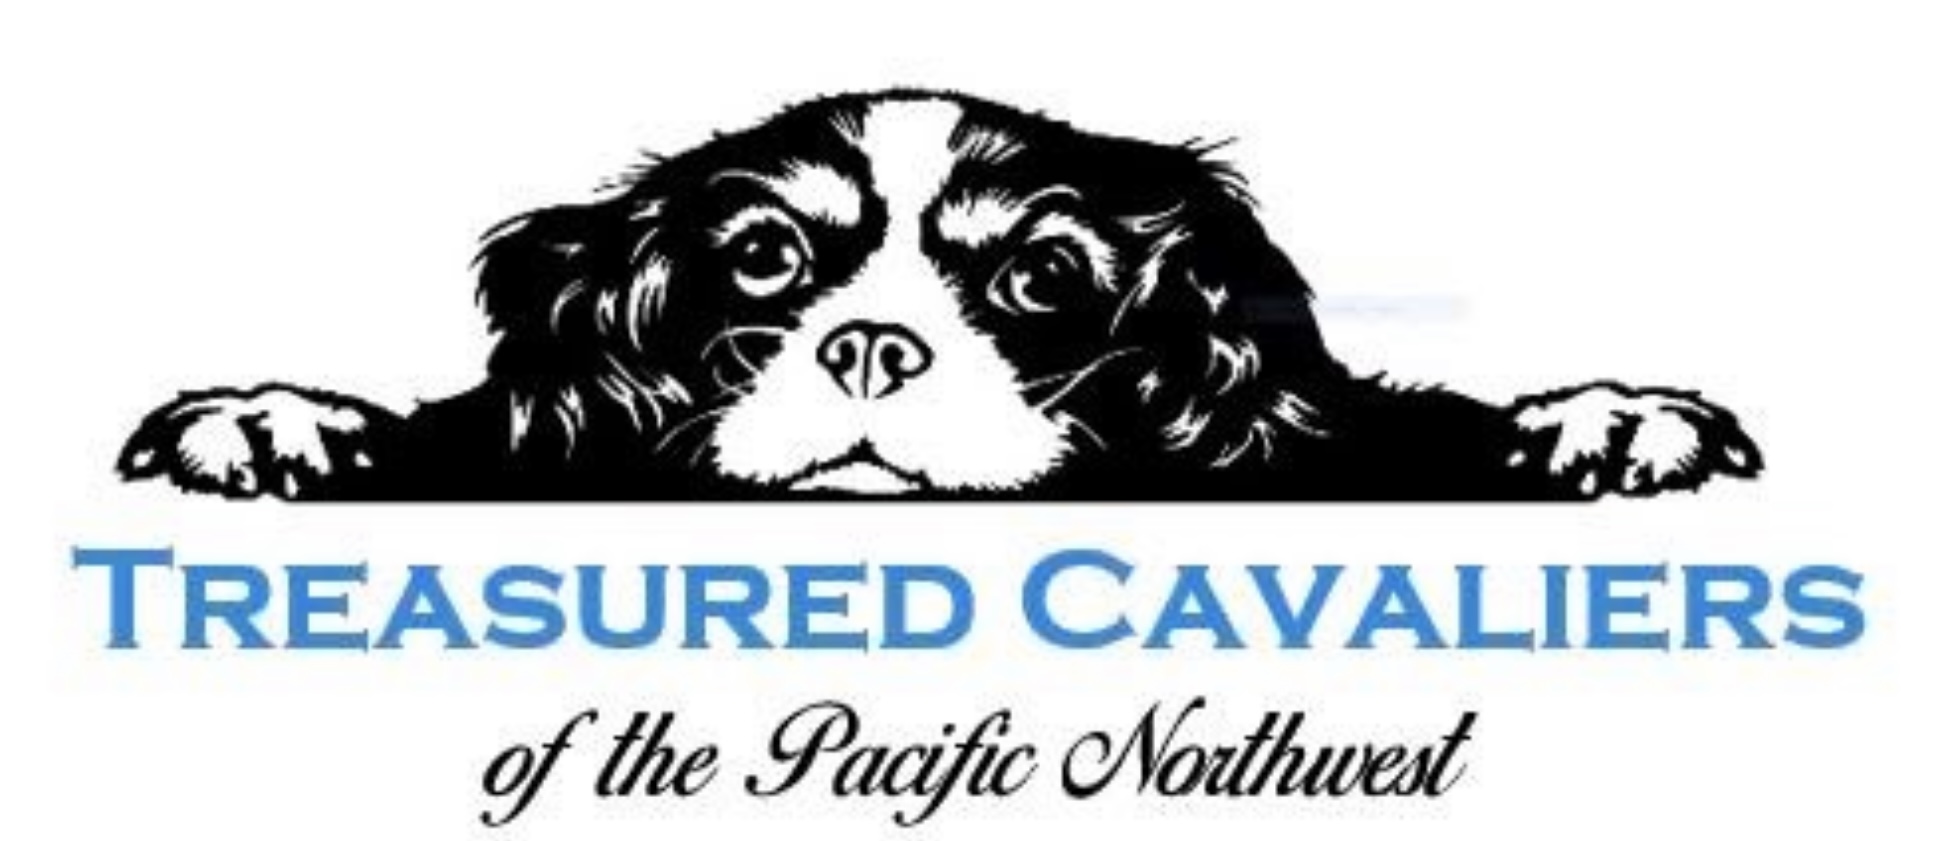 Treasured Cavaliers of the Pacific Northwest